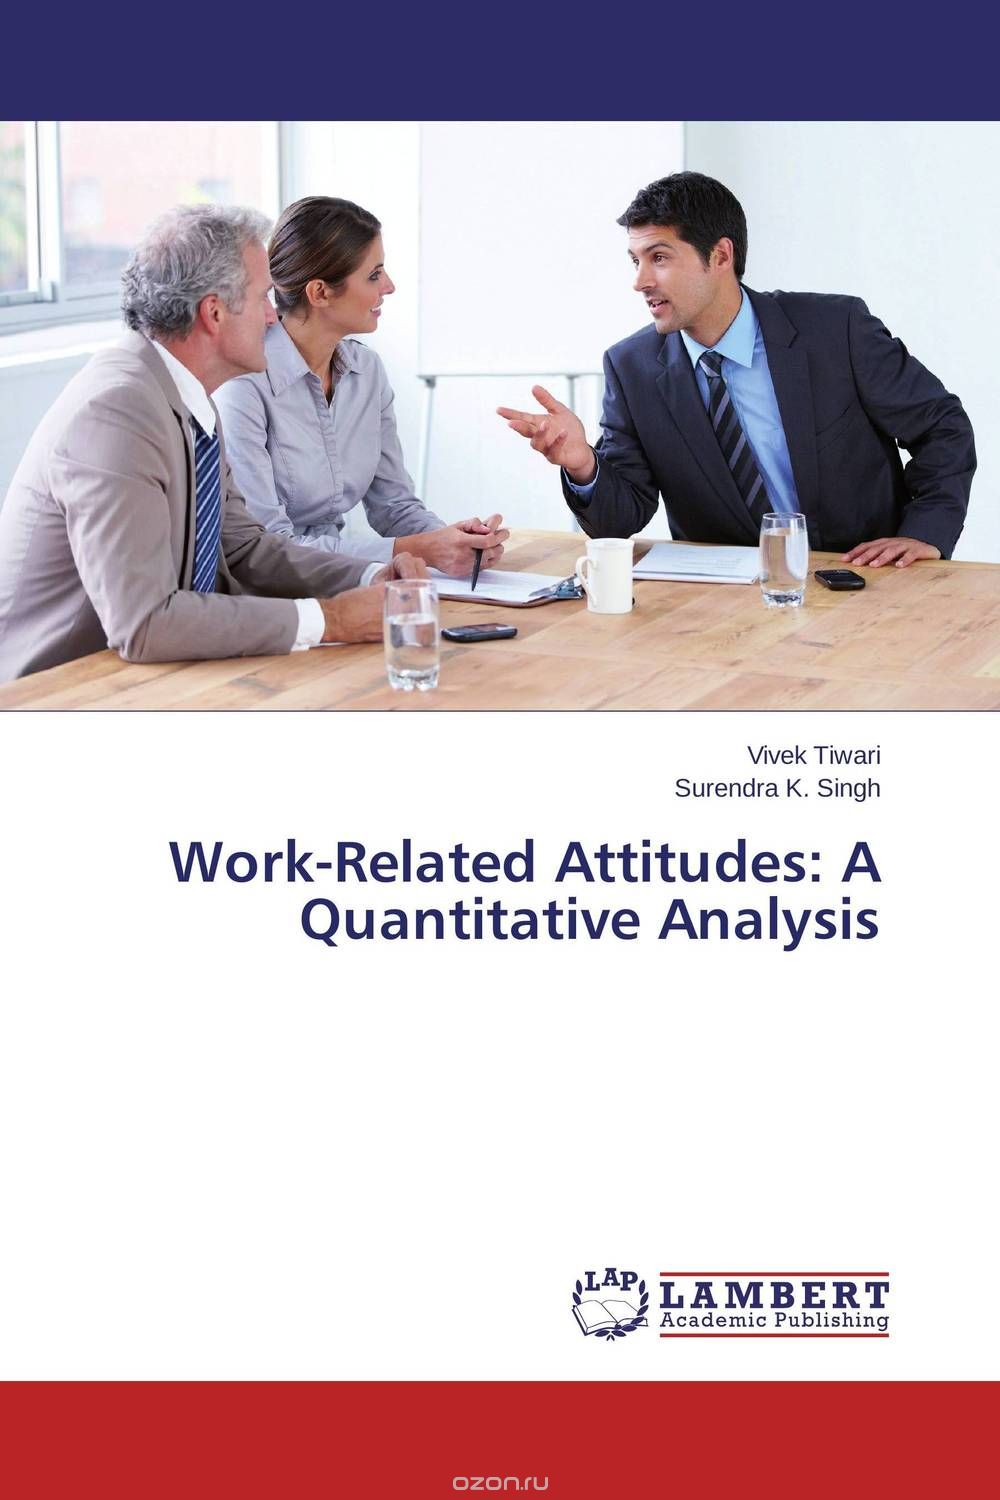 Скачать книгу "Work-Related Attitudes:  A Quantitative Analysis"